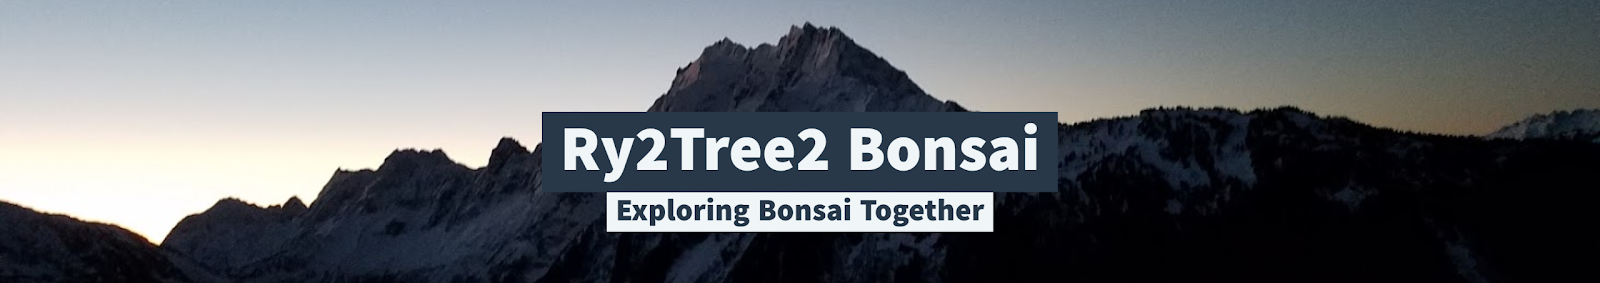 Ry2Tree2 Bonsai Blog